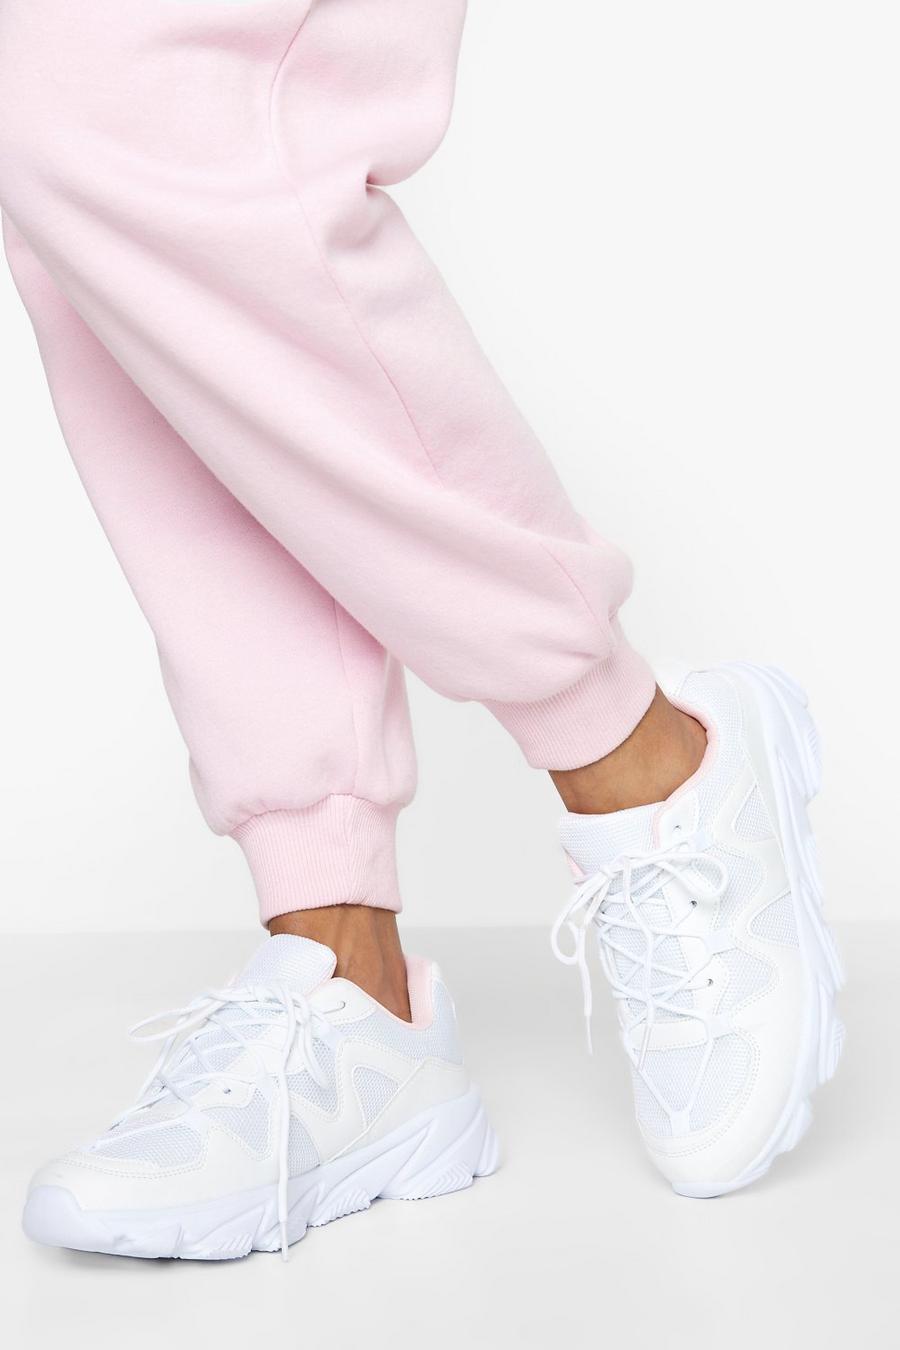 Zapatillas deportivas gruesas de holgura ancha con panel de malla, White blanco